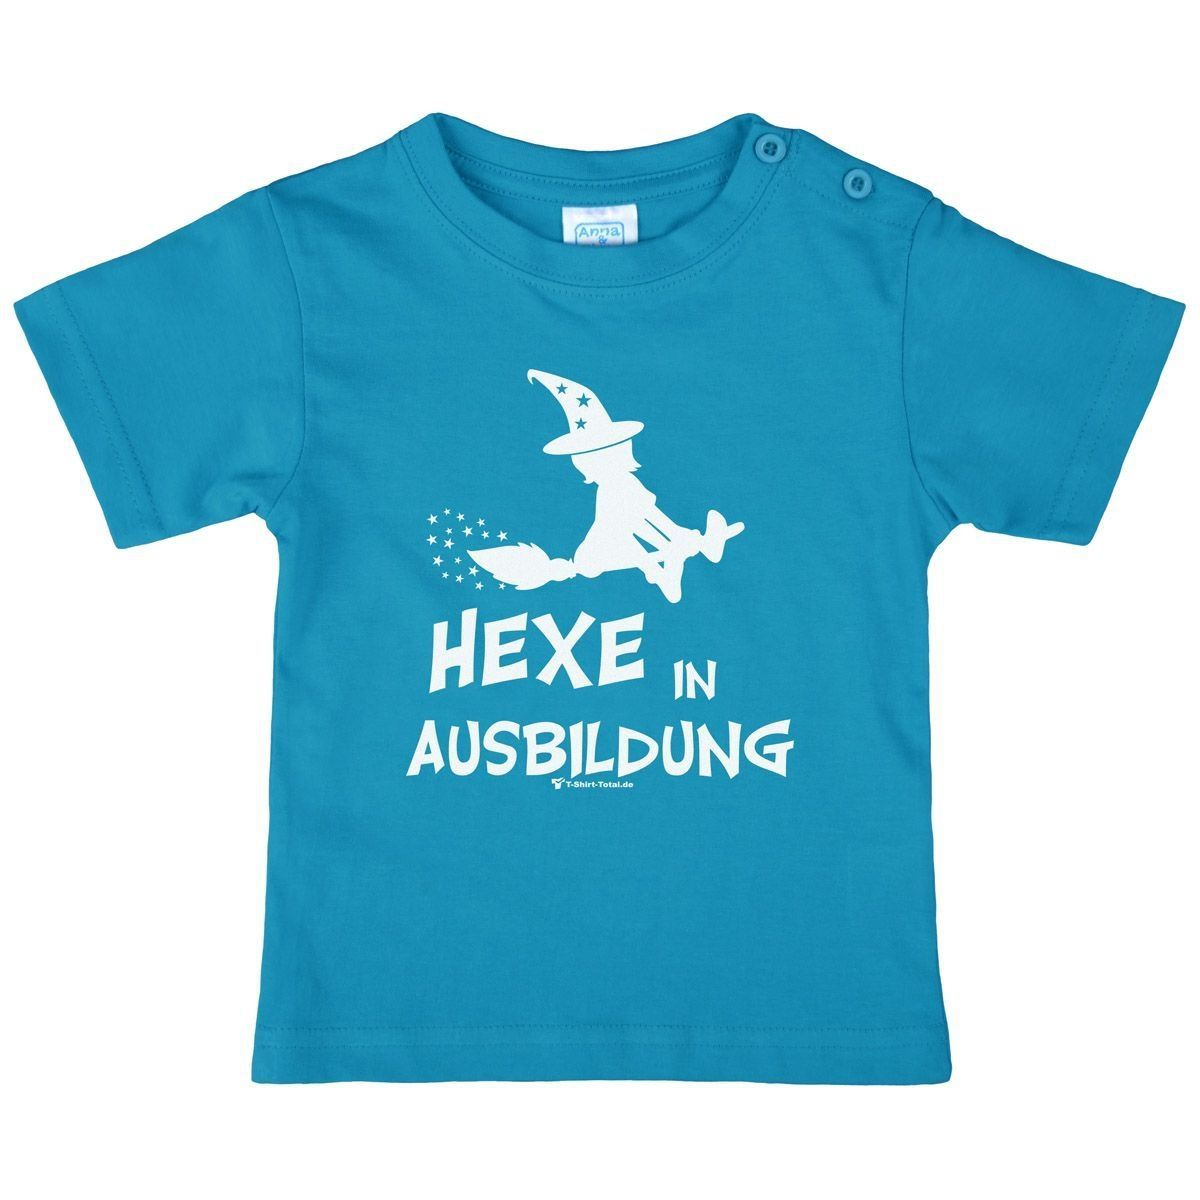 Hexe in Ausbildung Kinder T-Shirt türkis 110 / 116